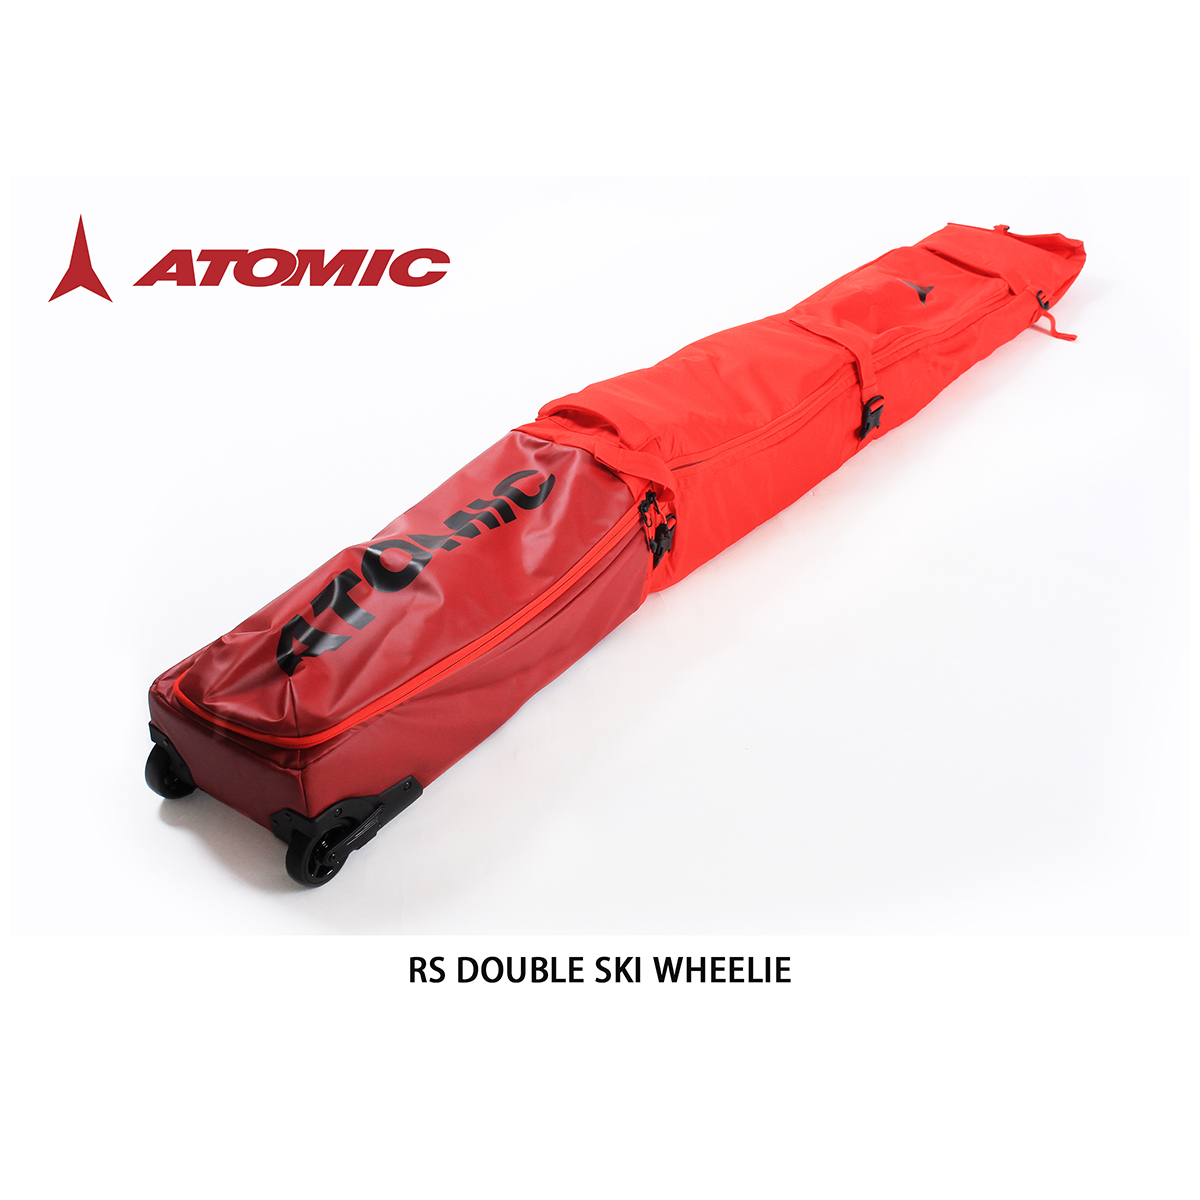 Atomic Funda Double Ski Bag - Inicio